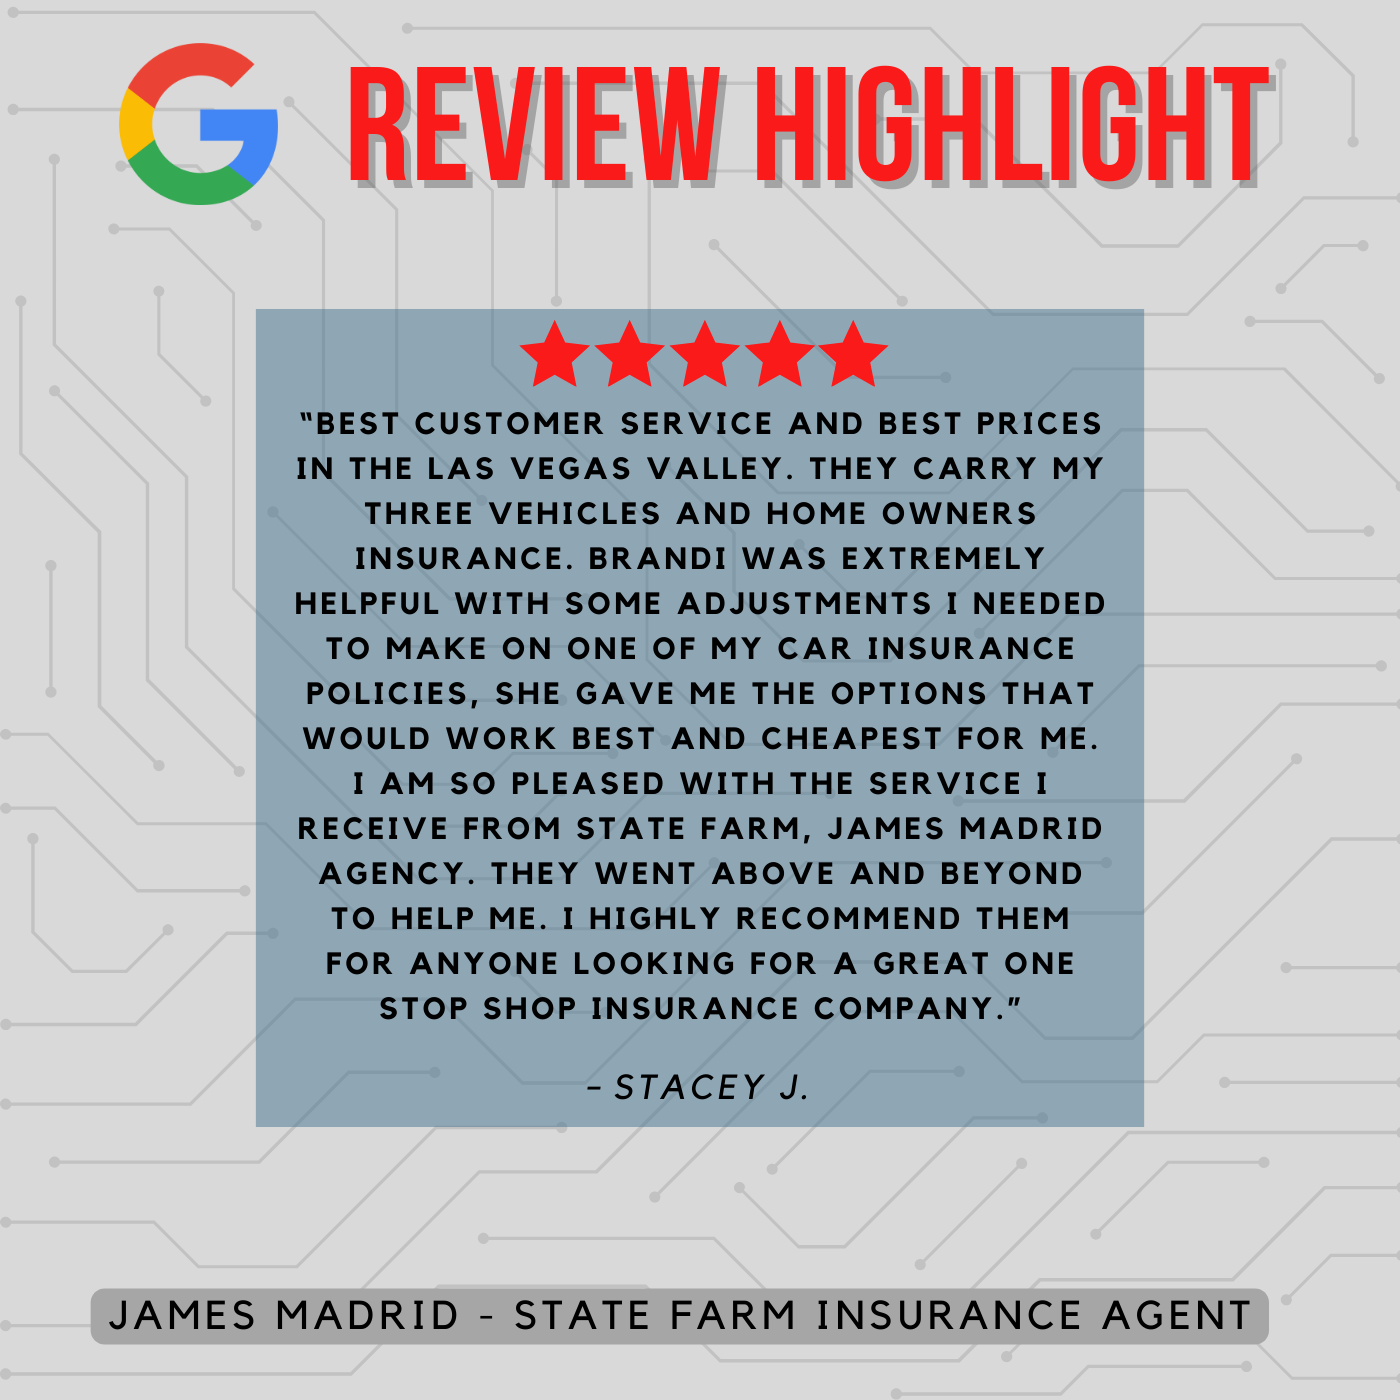 James Madrid - State Farm Insurance Agent
Review highlight James Madrid - State Farm Insurance Agent Las Vegas (702)998-8700